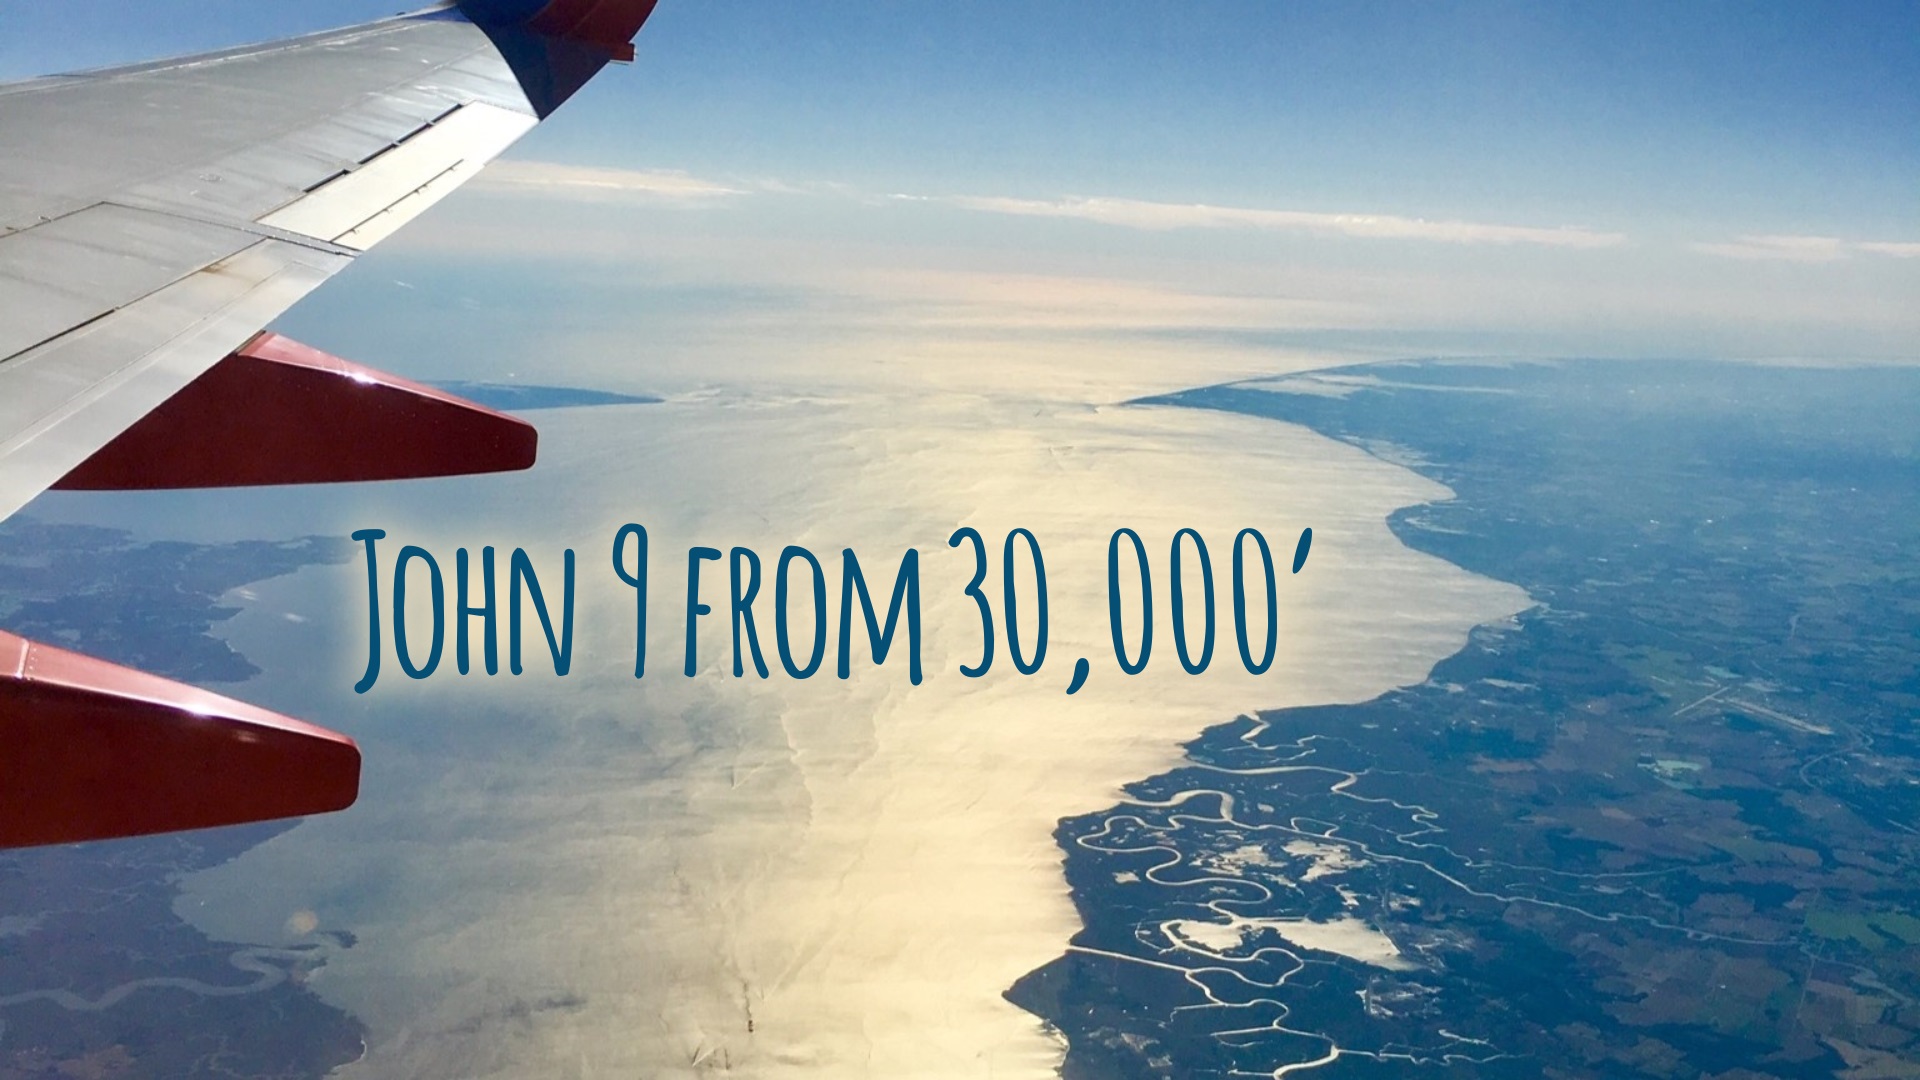 John 9 from 30,000 Feet